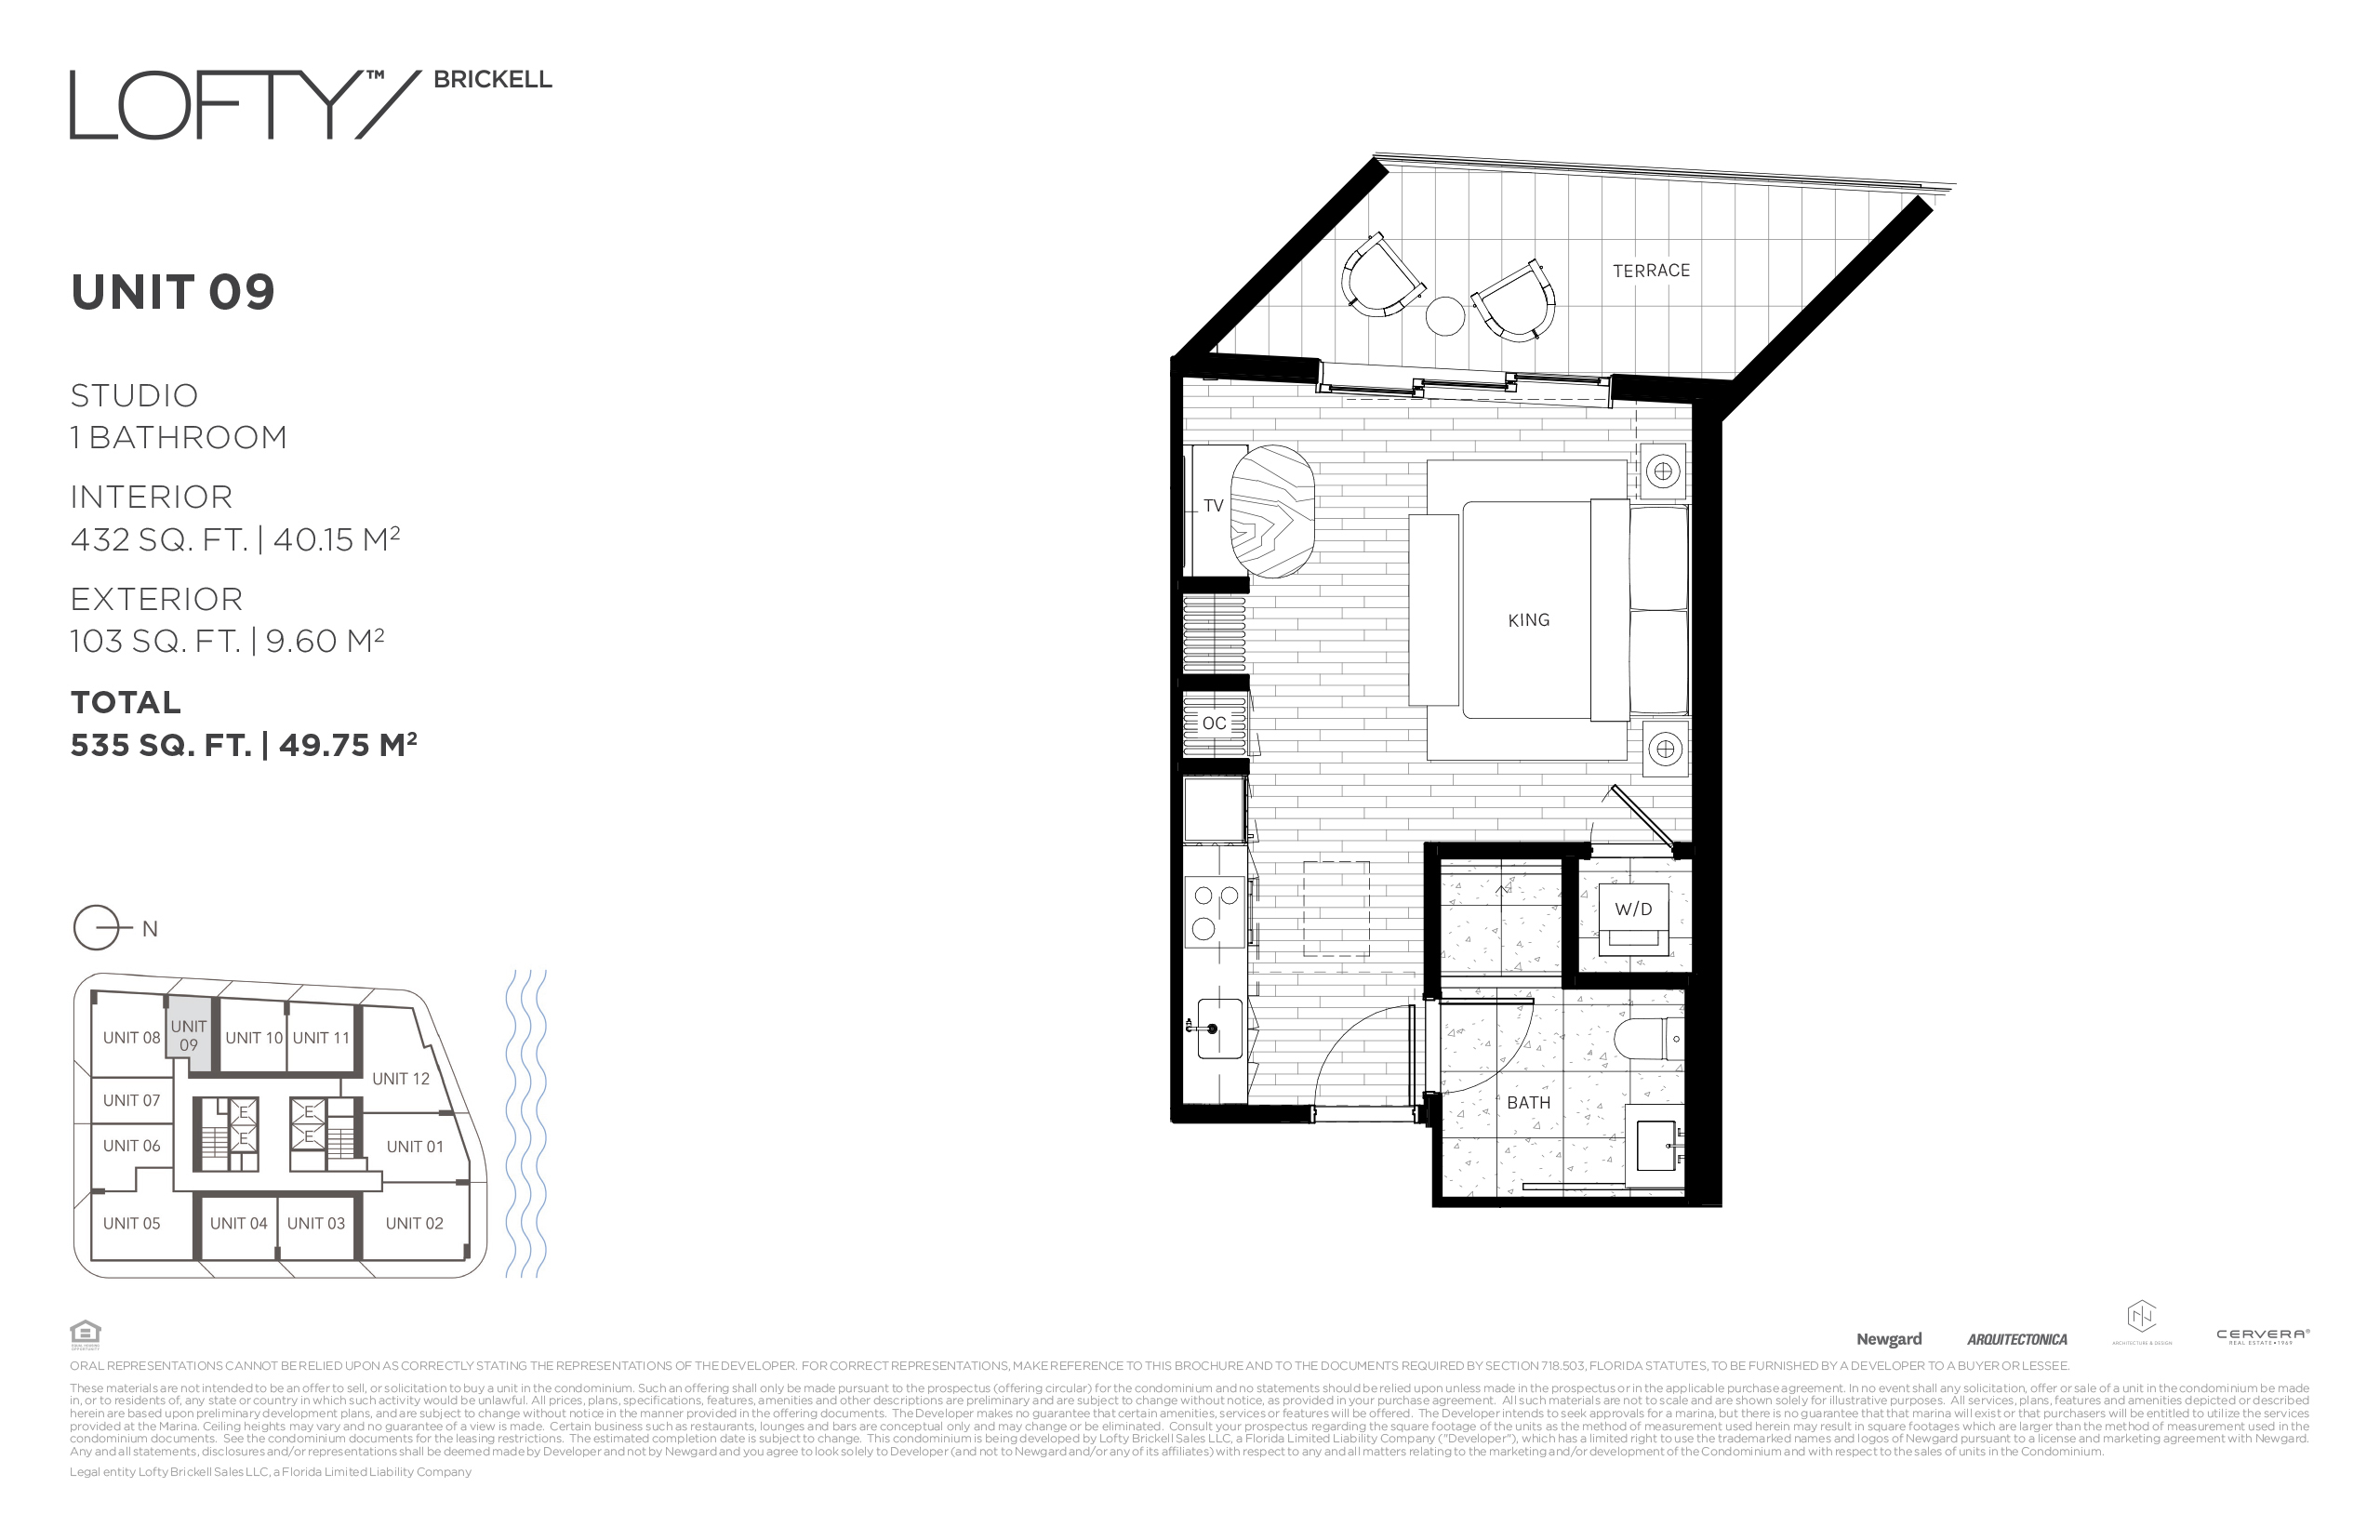 Floor Plan for Lofty Brickell Floorplans, Unit 09